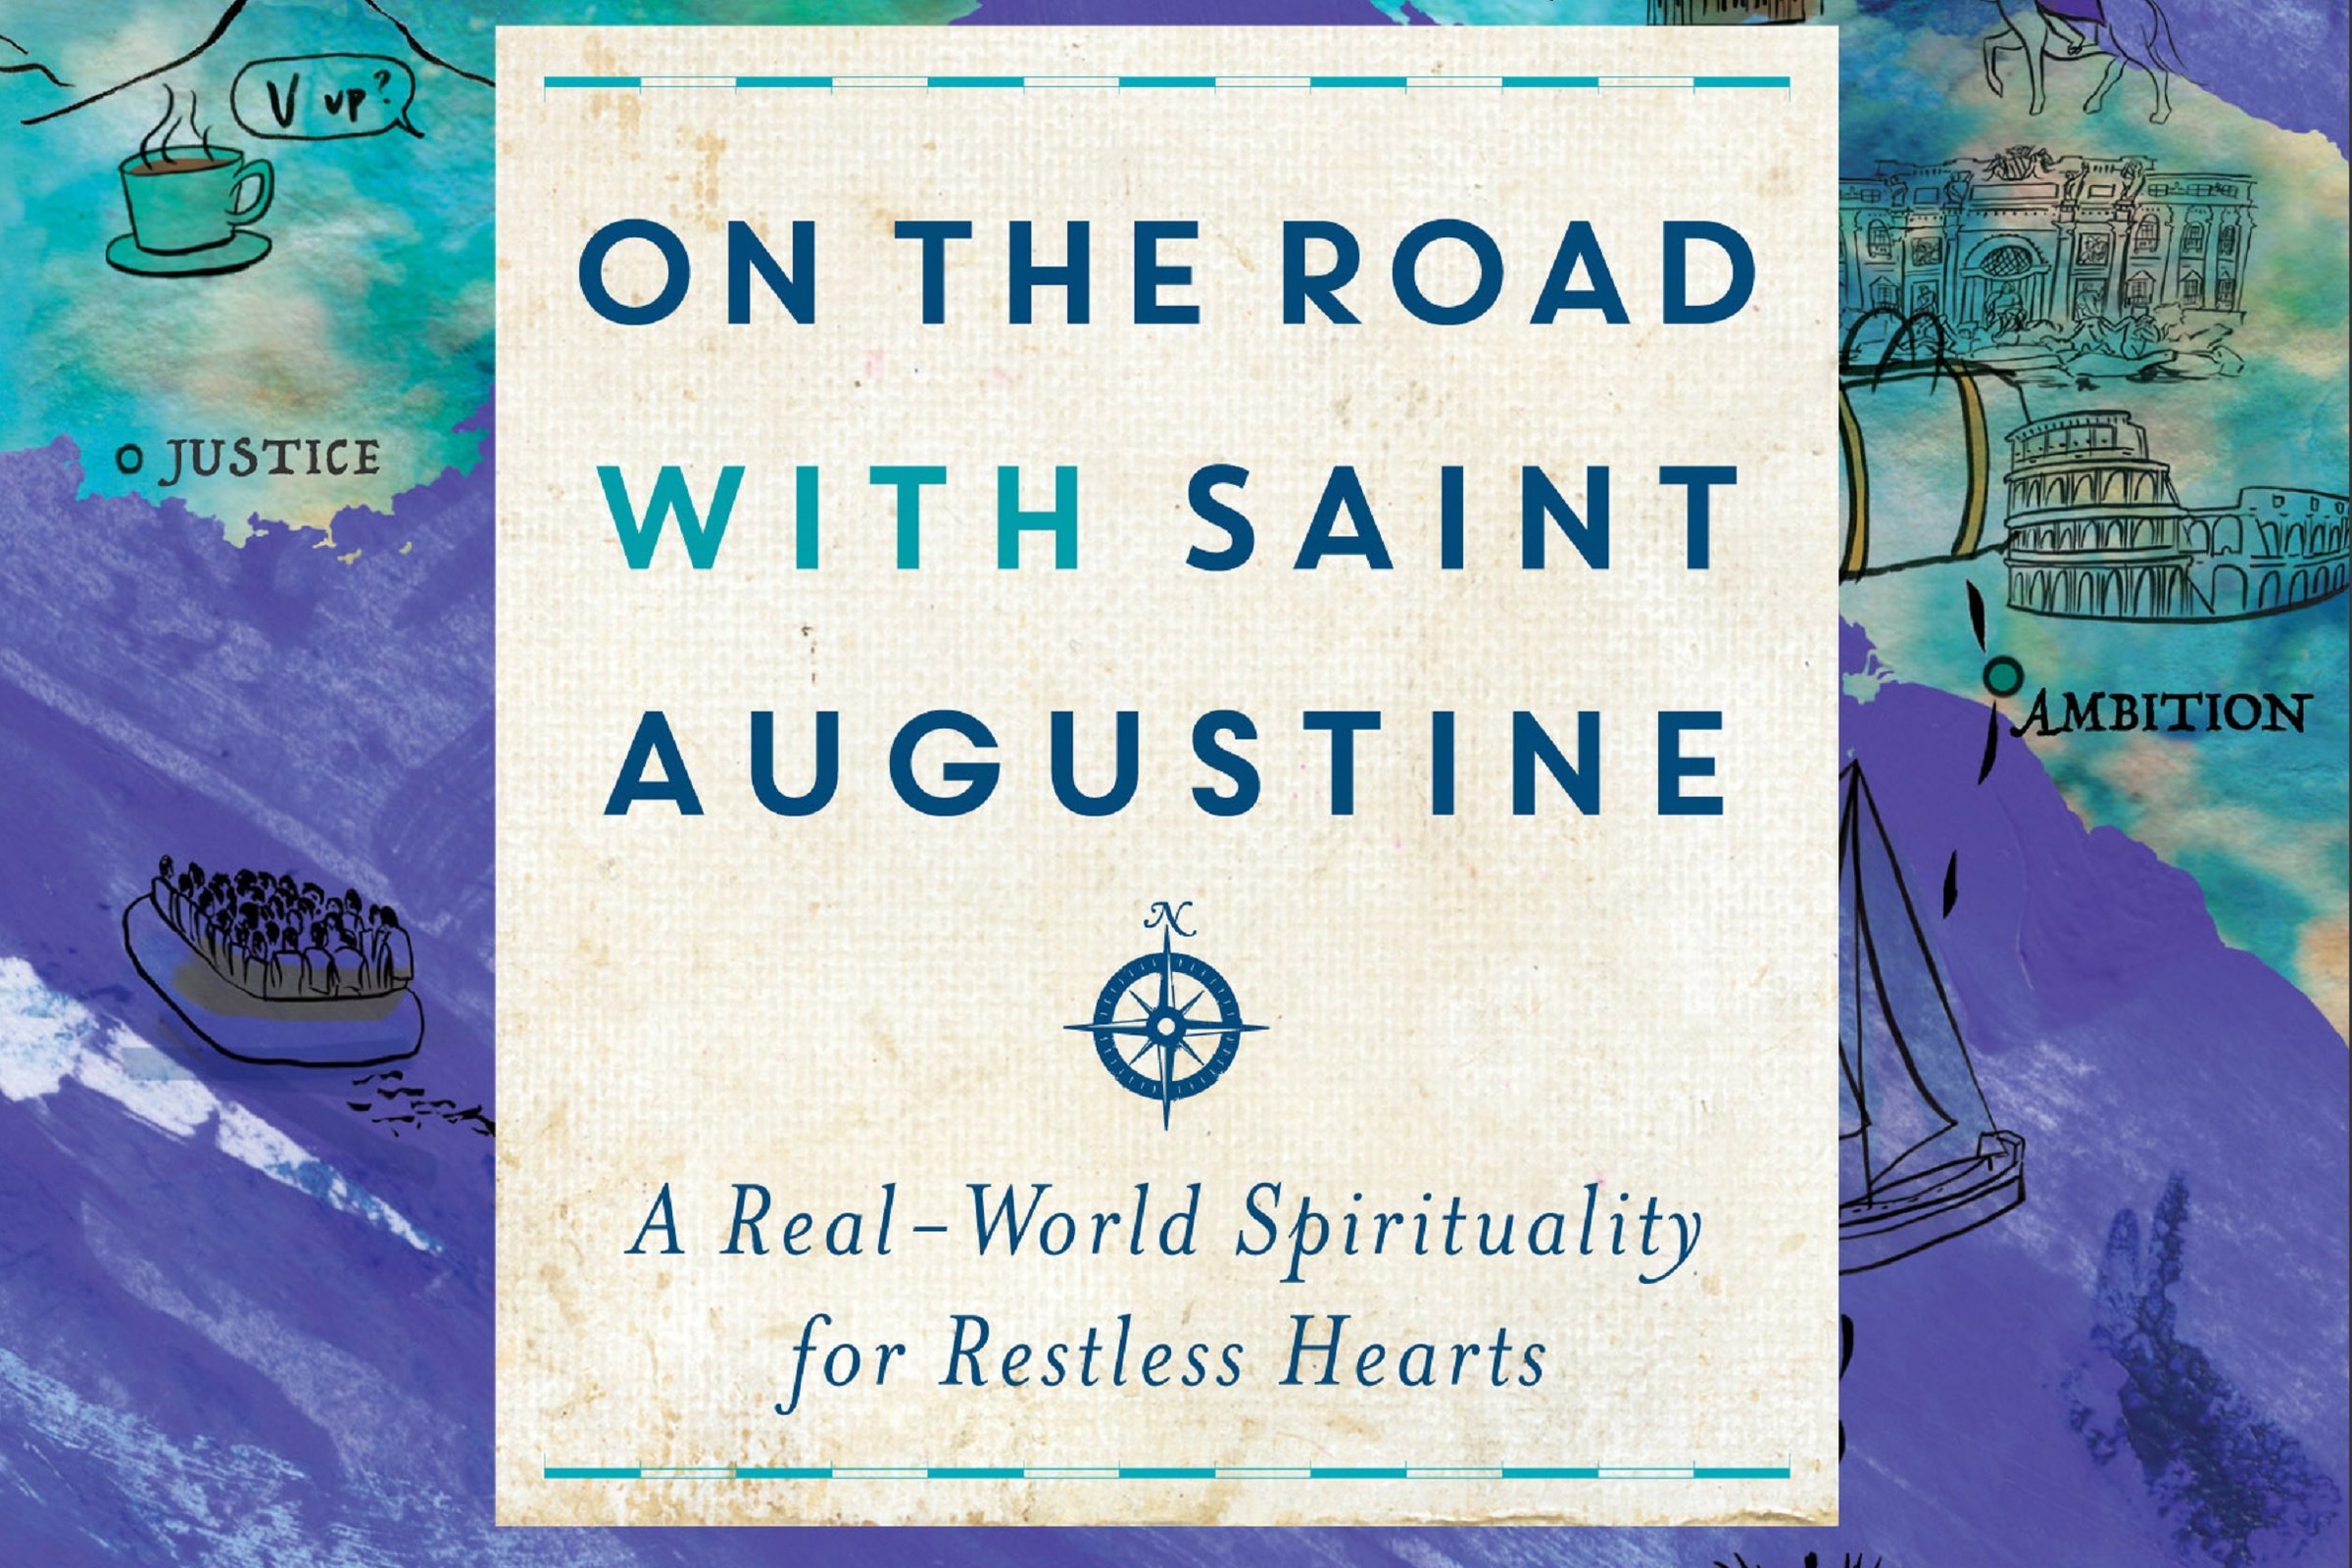 Saint Augustine Now: A Spiritual Life in a Secular Age